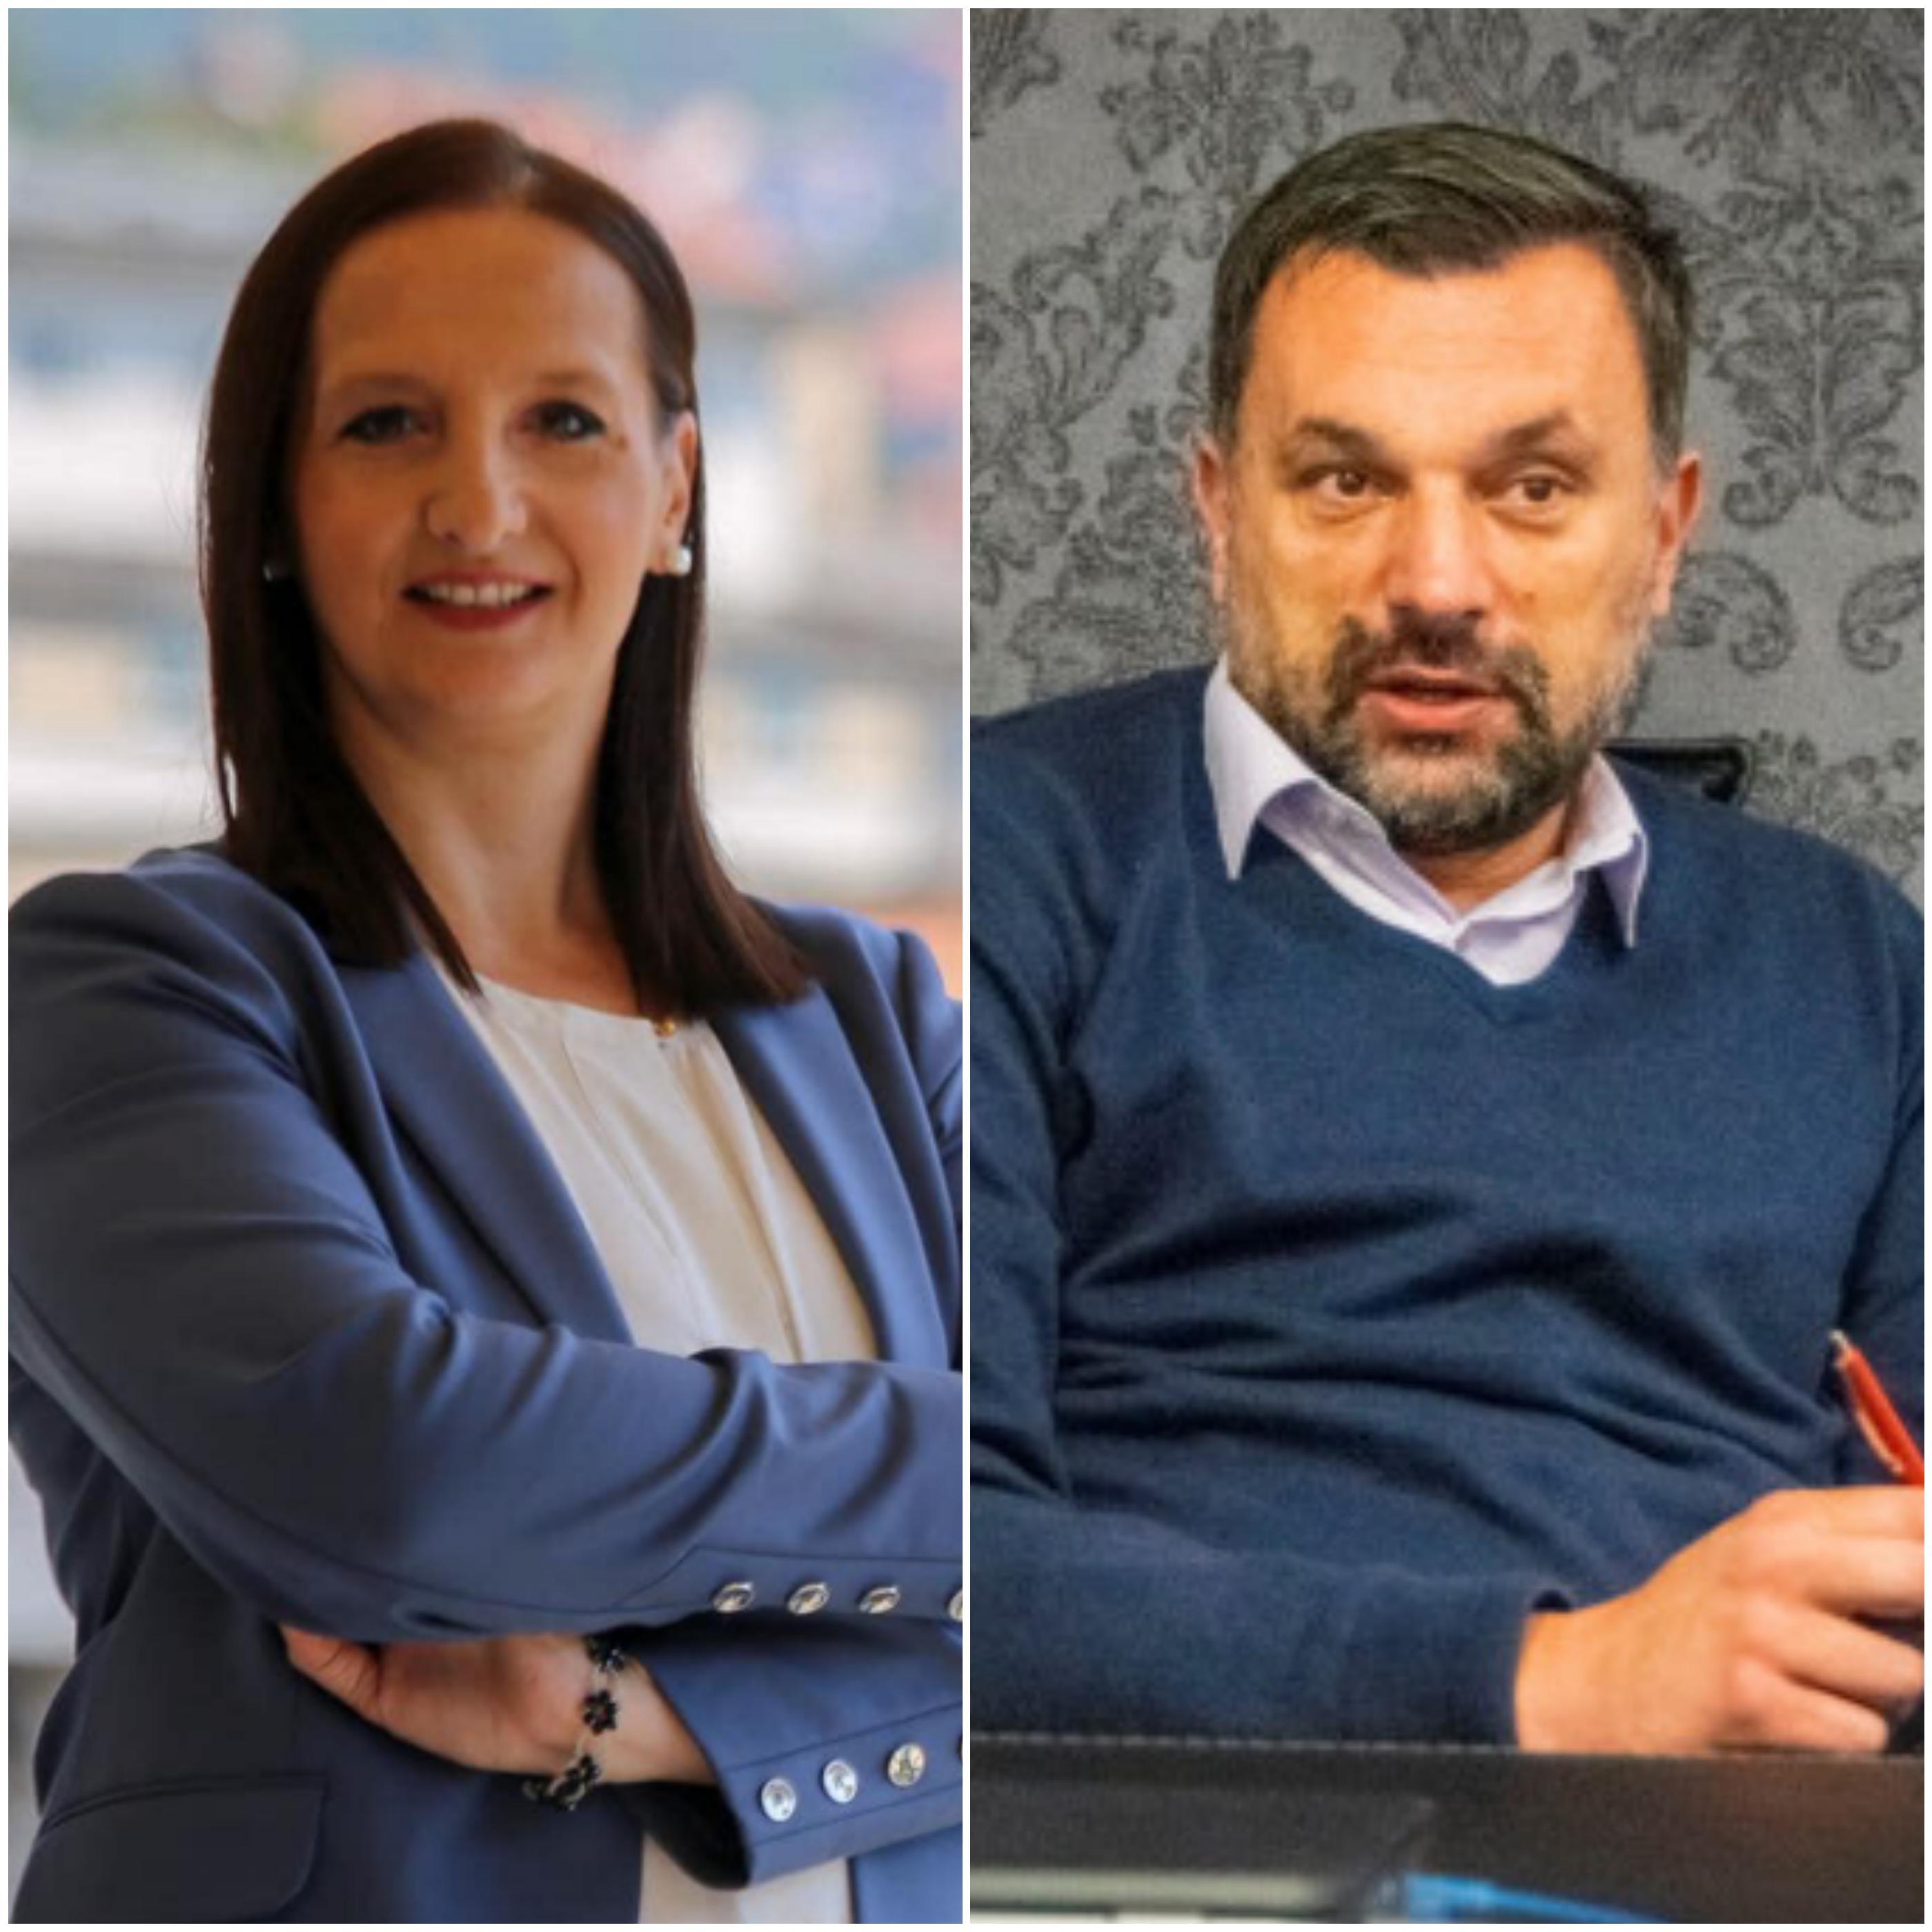 Zastupnica Bišćević-Tokić prozvala lidera NiP-a Elmedina Konakovića - Avaz